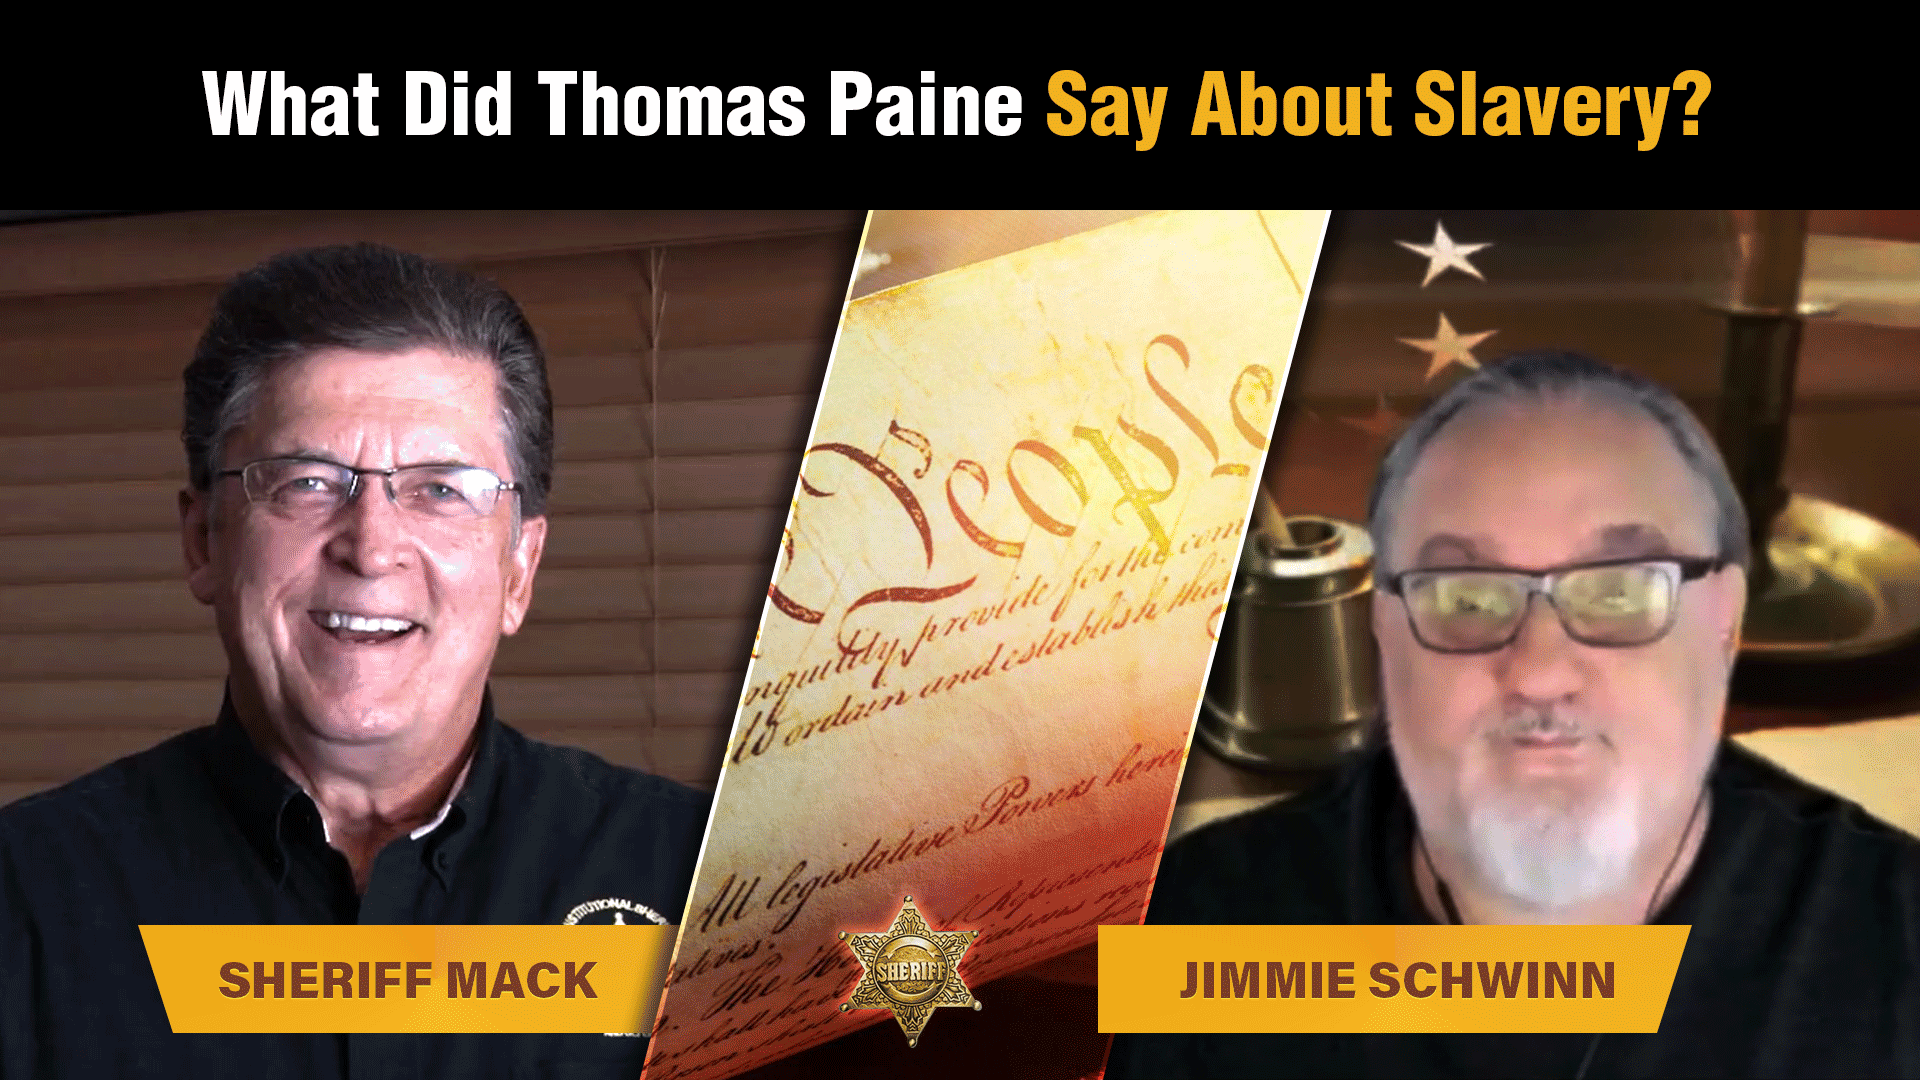 Jimmie Schwinn and Sheriff Mack talks about how slavery is tyranny.